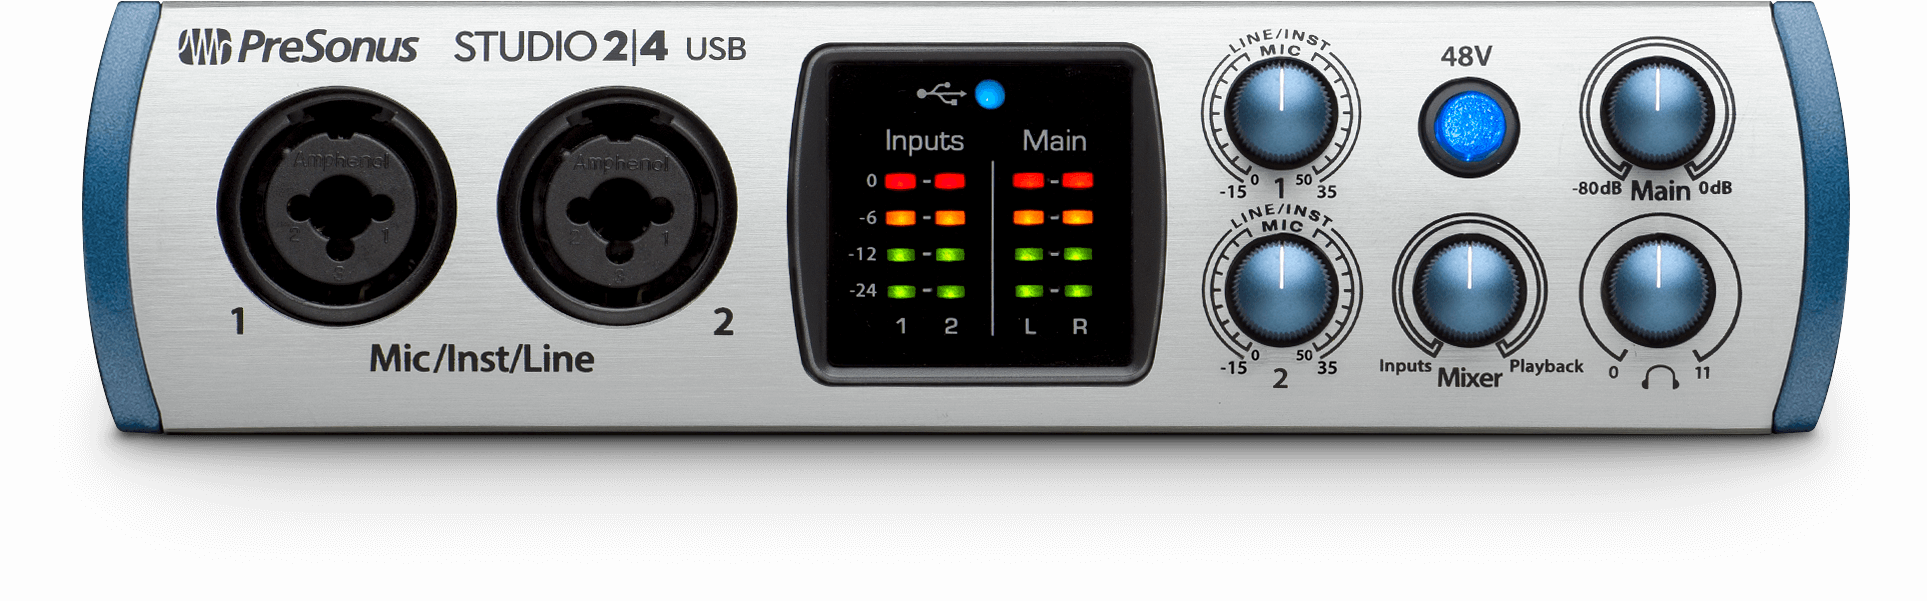 USB-C Audio Interface with MXL Microphone 192 kHz ISK Headphones Stand & Cables Bundle Presonus Audio Interface 1810 8x8 